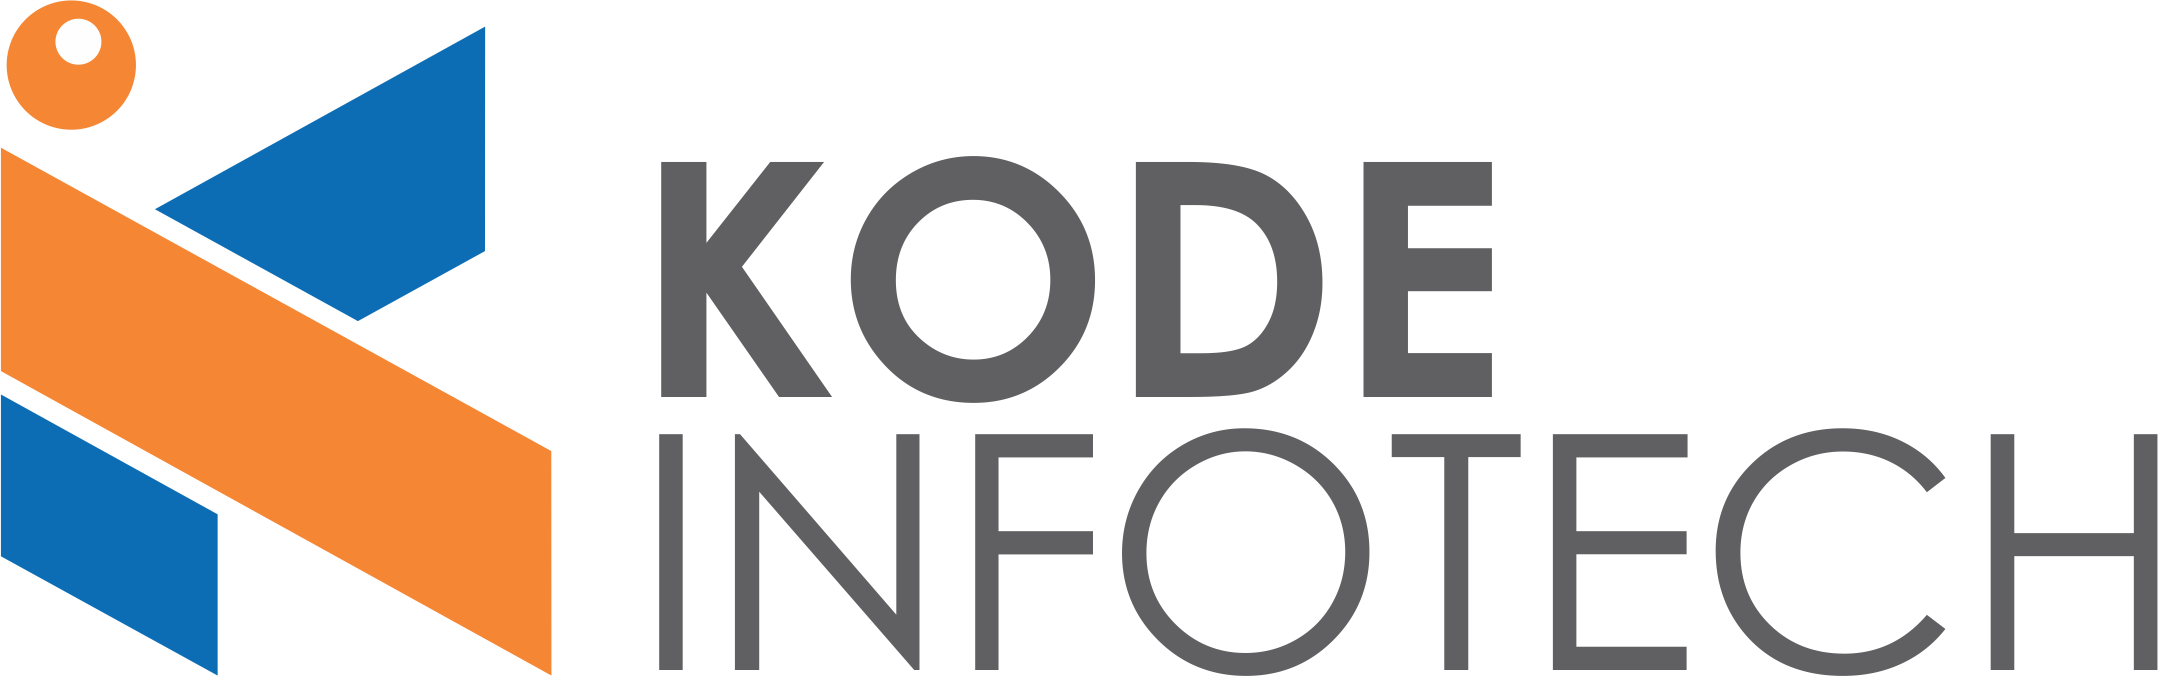 Kode Infotech Logotipo png